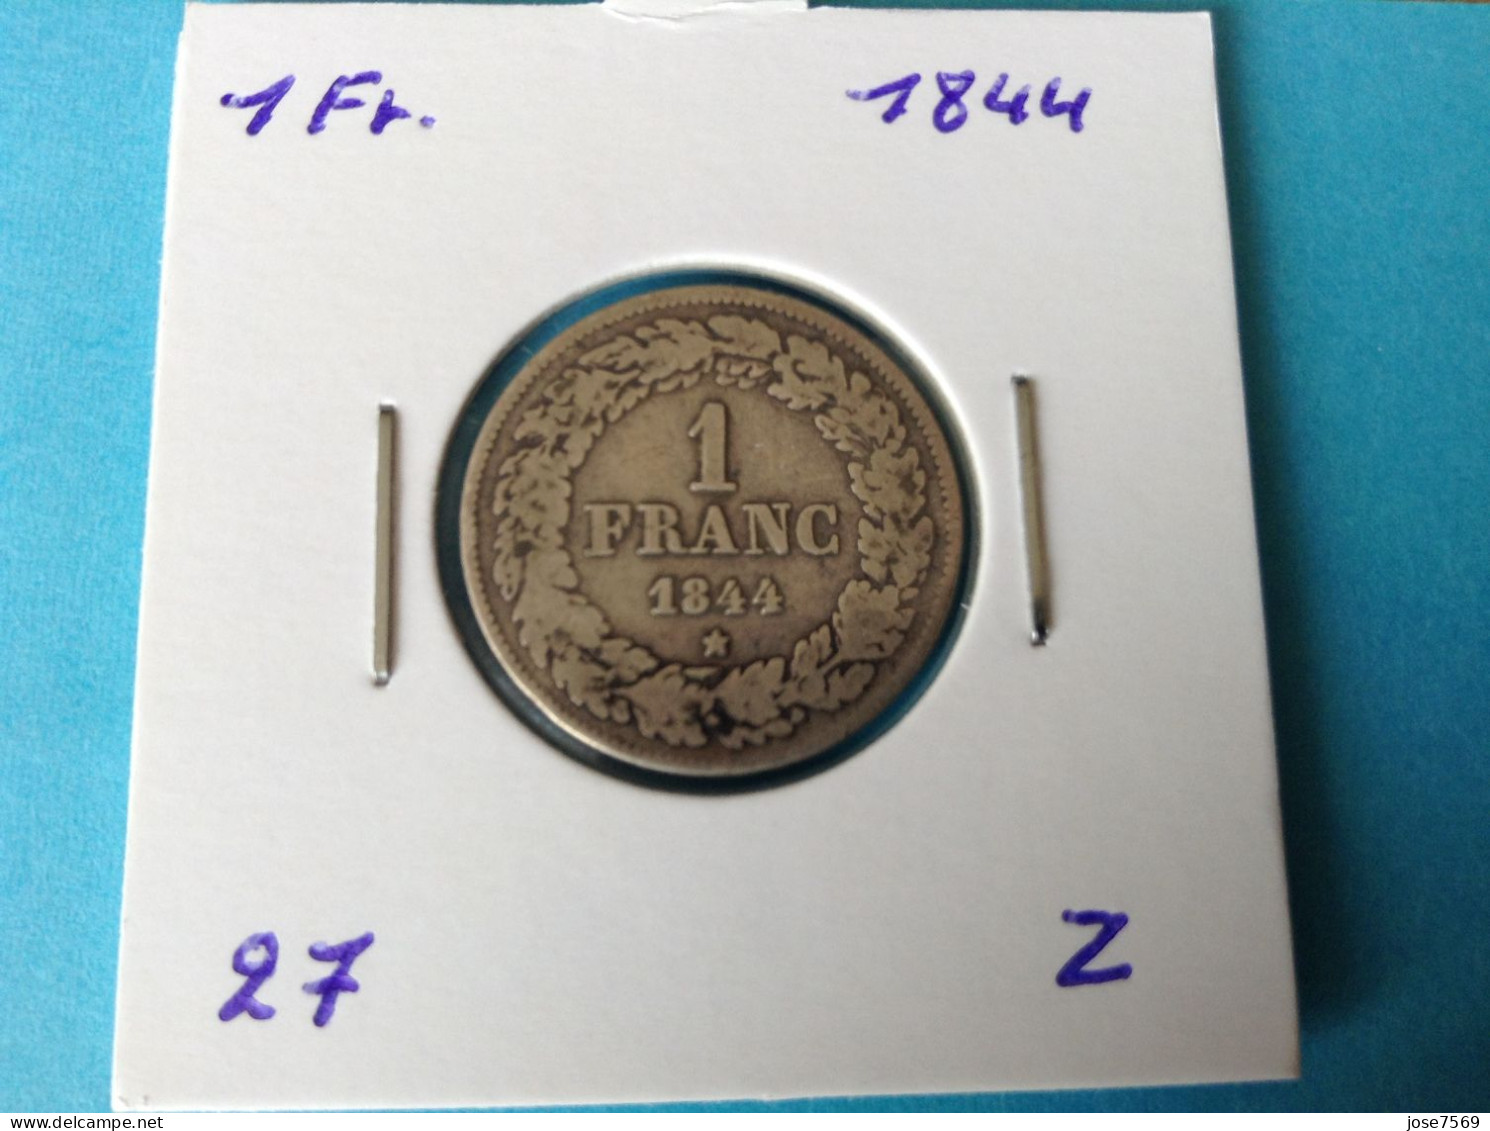 België Leopold I 1 Frank 1844 Gelauwerd Smalle Kartel Zilver. (Morin 27) - 1 Franc